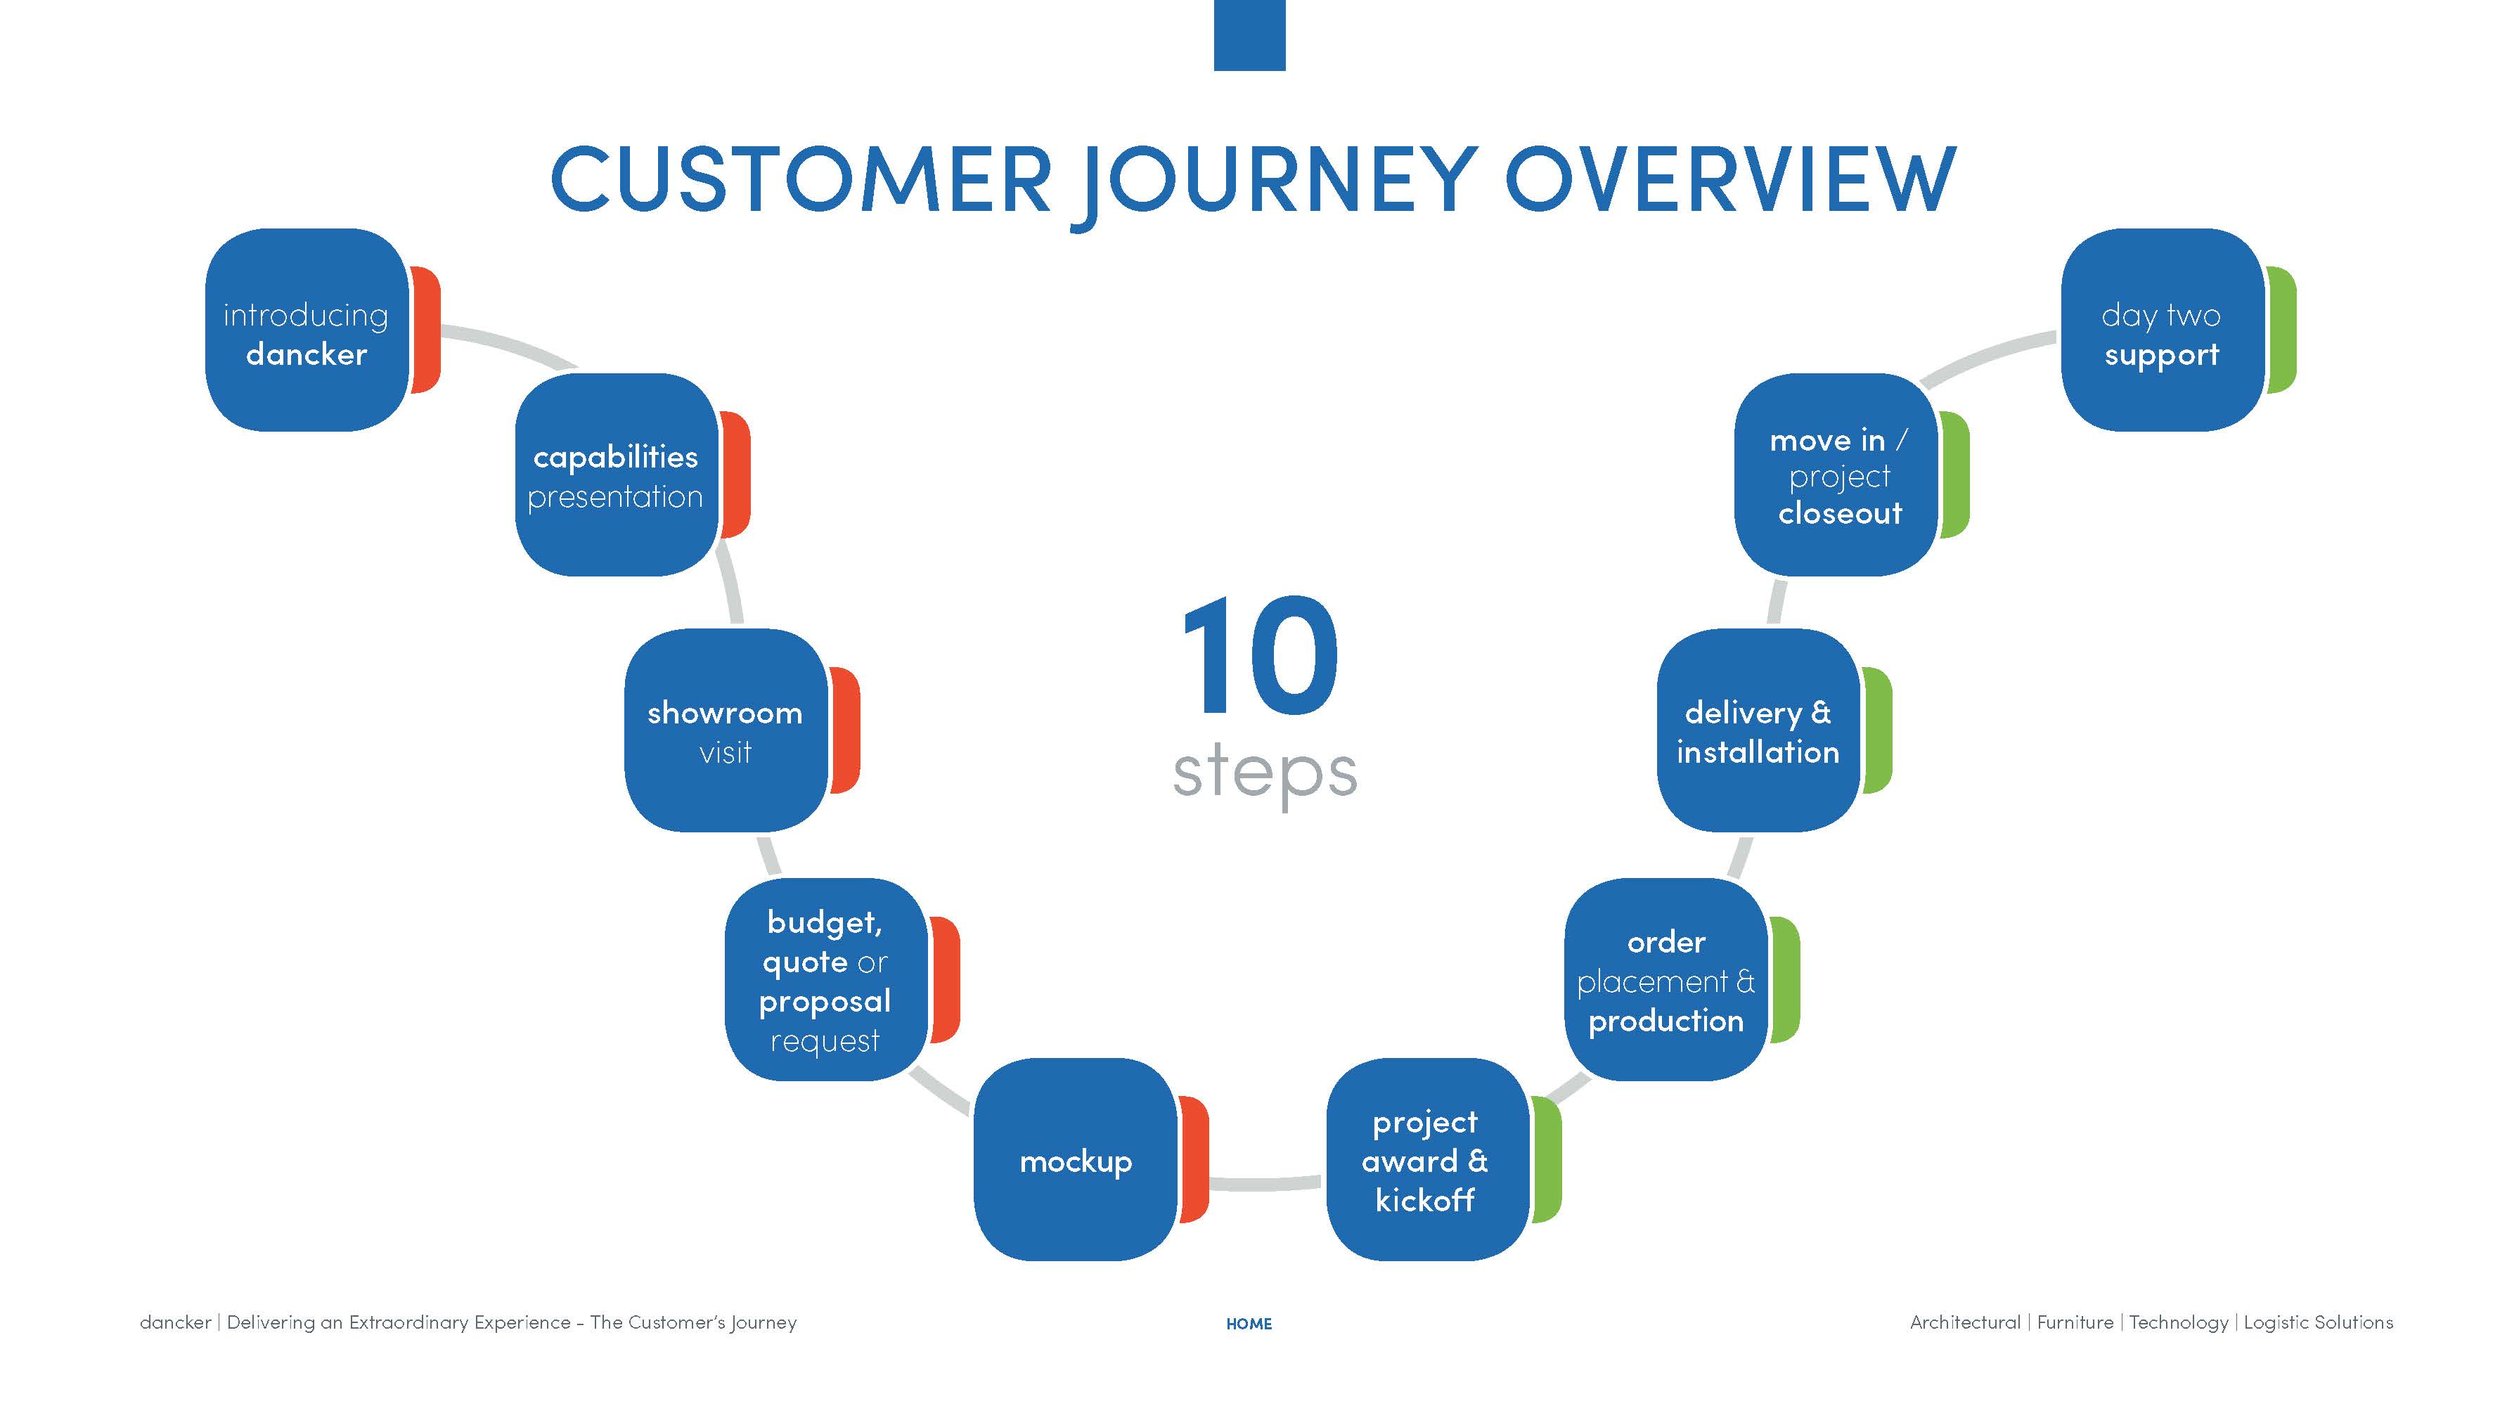 dancker_Customer Journey_Interactive Process_draft 3_Page_02.jpg